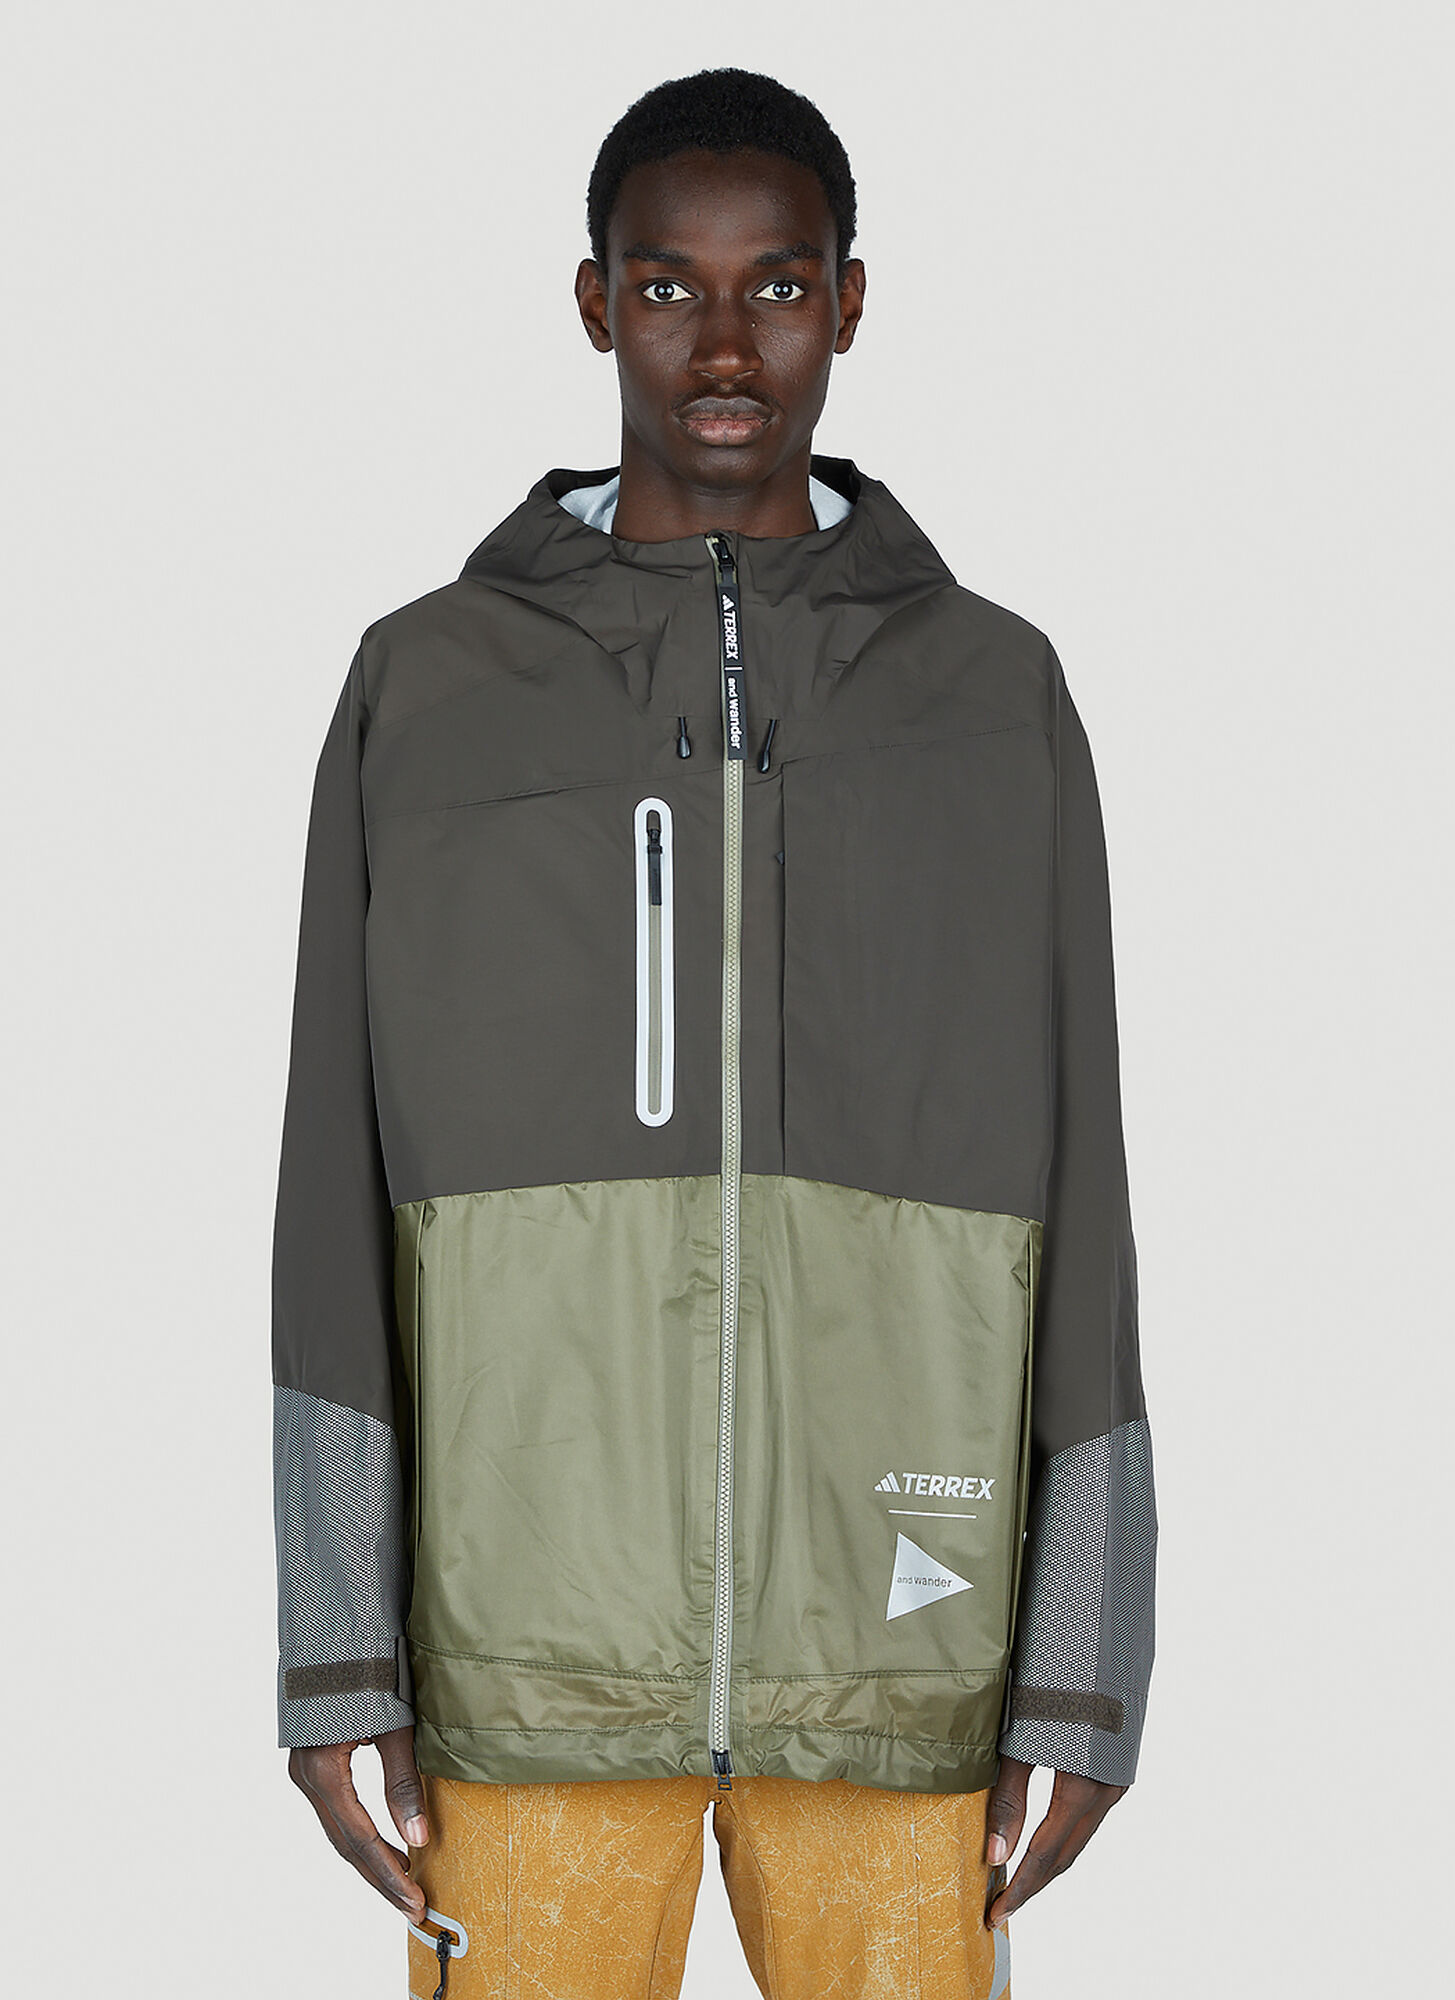 Adidas Terrex X And Wander Xploric Rain Jacket Male Green In Shadow Olive/olive Strata